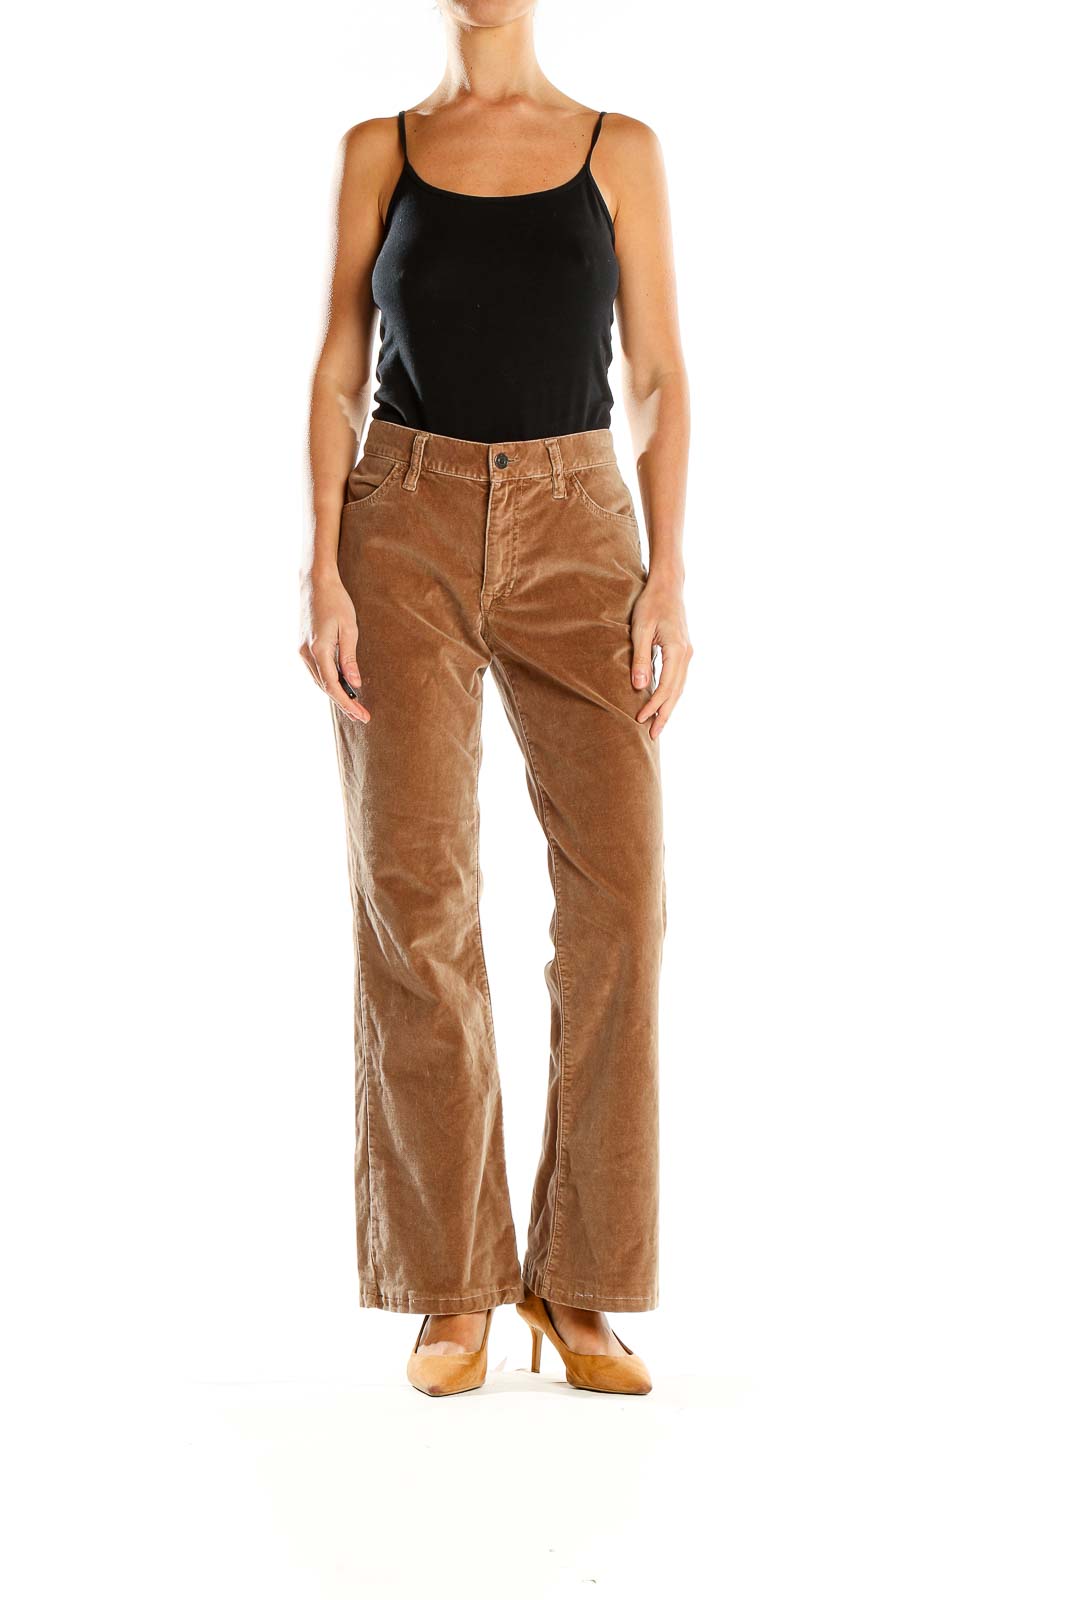 Gap - Brown Textured Bootcut Pants Cotton Spandex Elastane